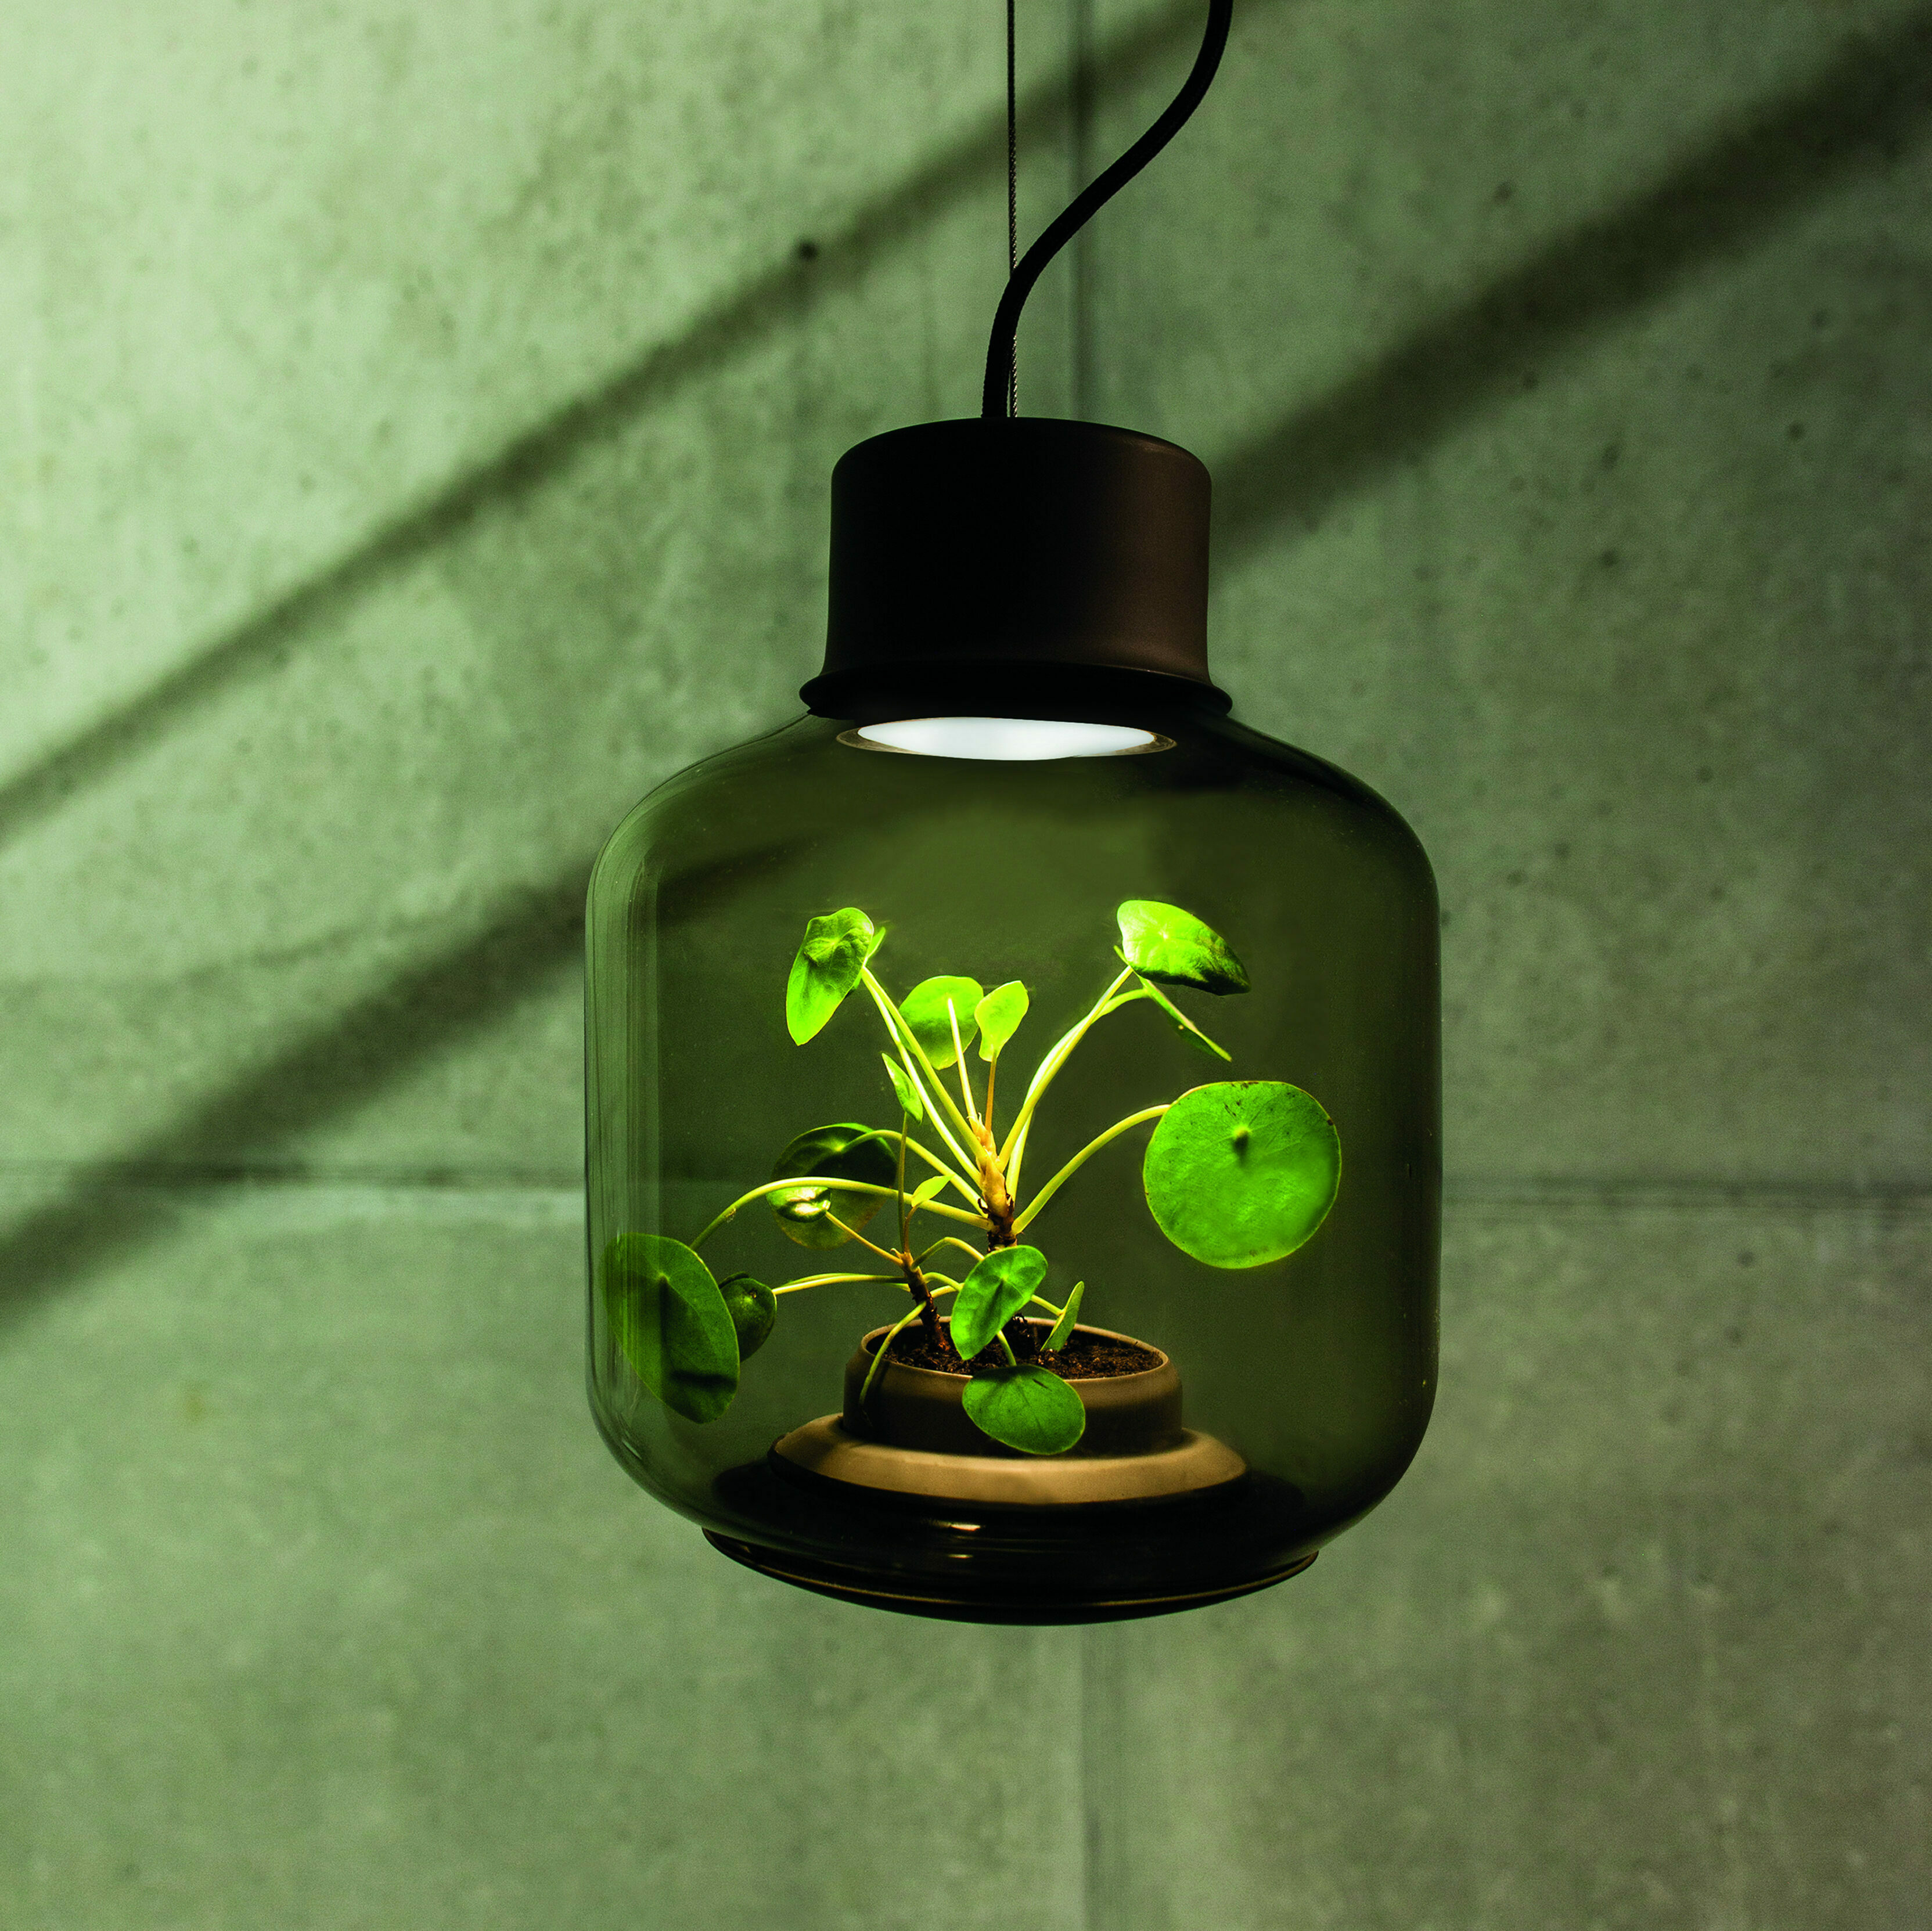 mygdal lamp nui studio lampe pflanzengefaess design inneneinrichtung einrichtungsidee